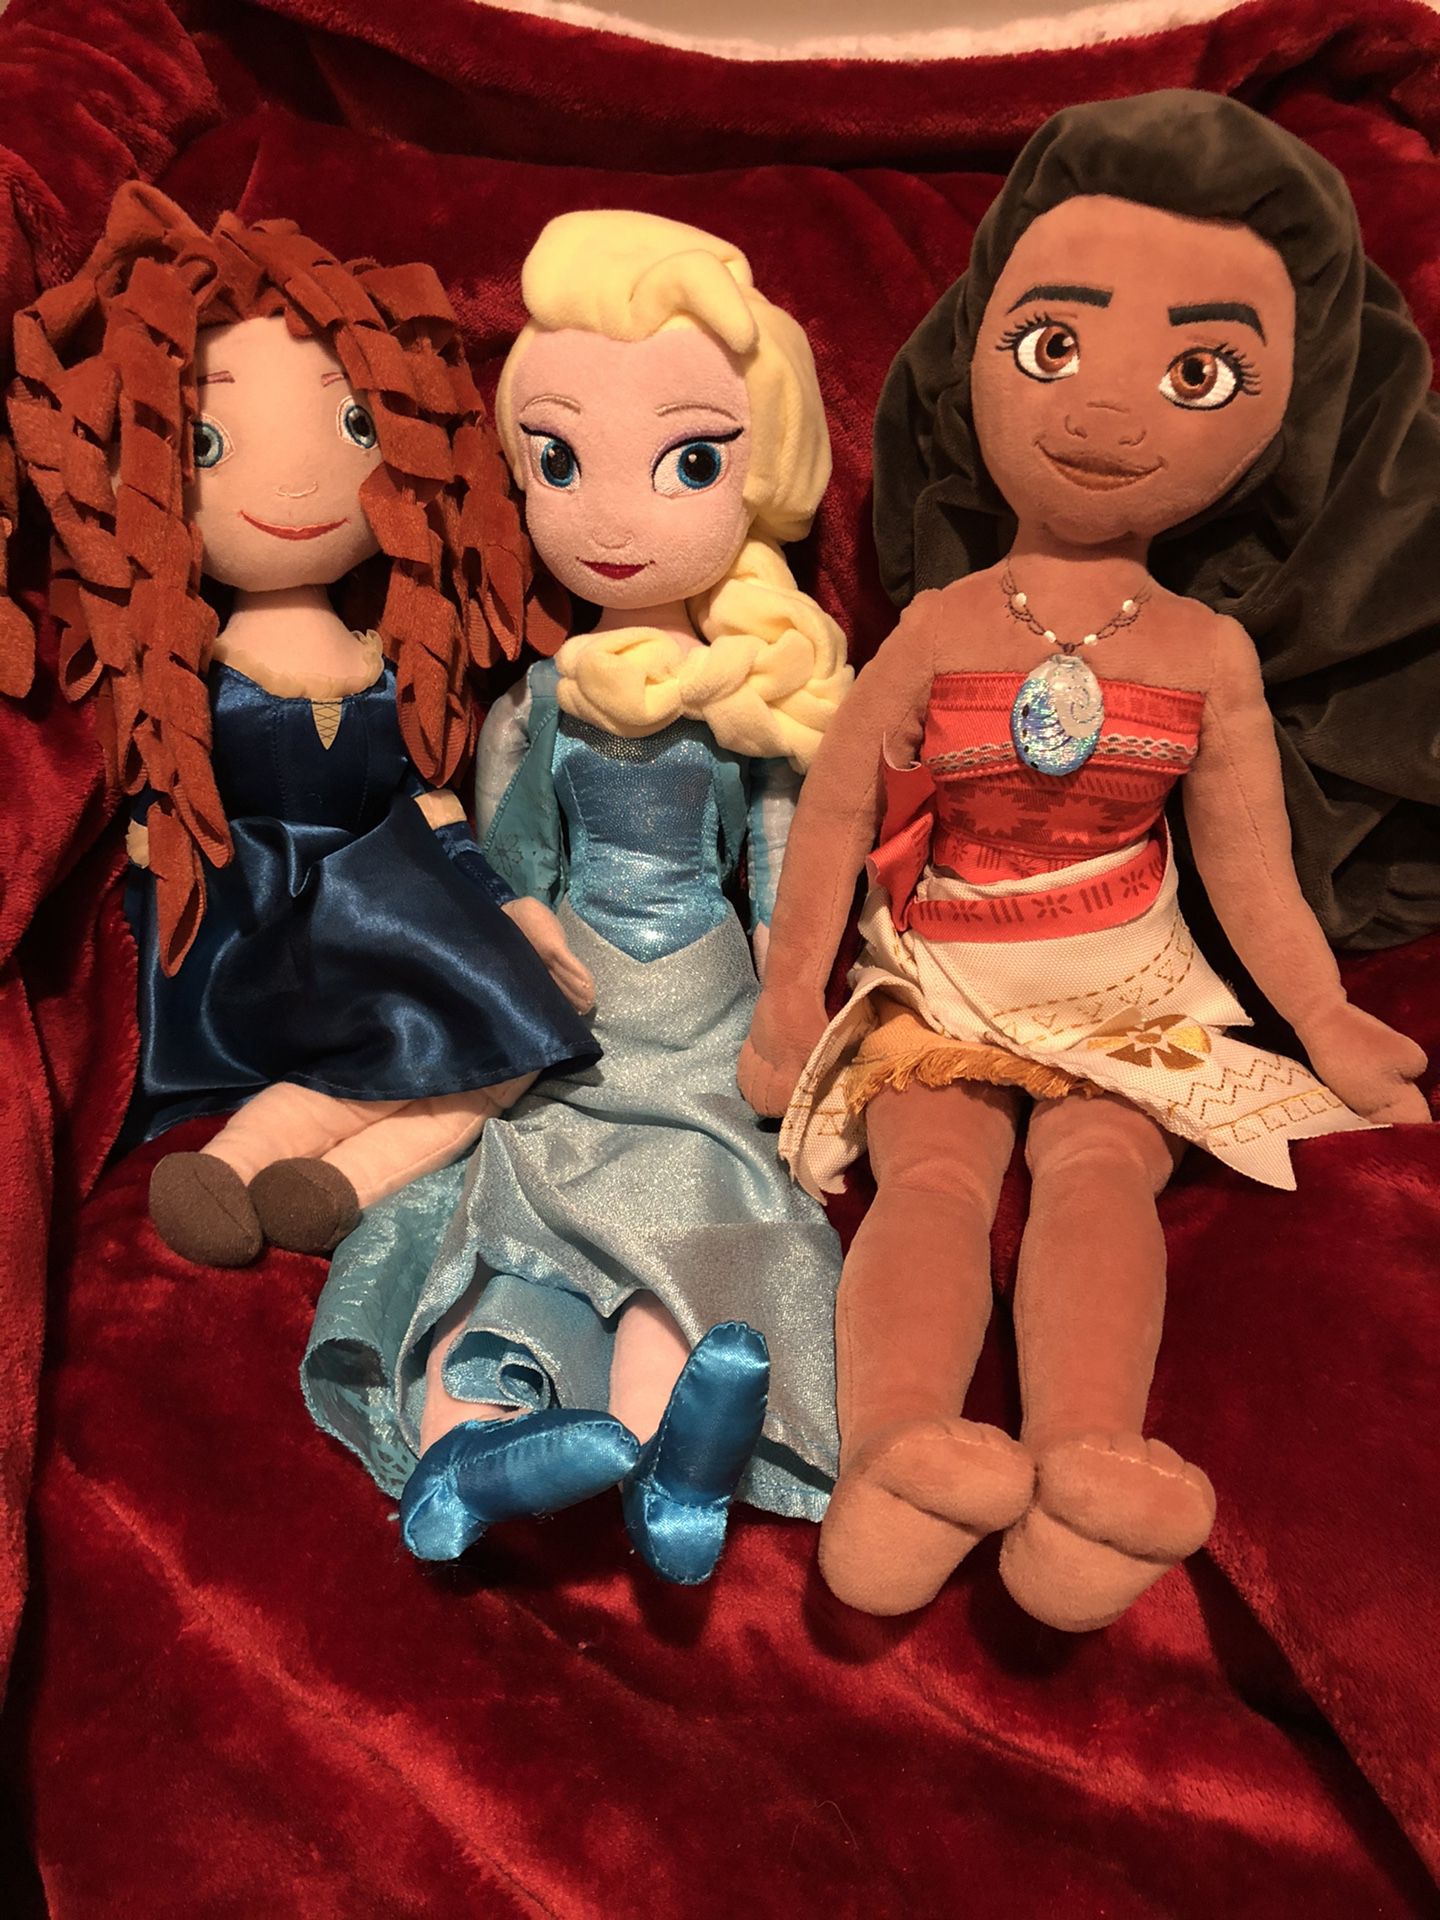 Disney Princess Plush Doll Lot Sale! Frozen Elsa, Moana, Brave! Christmas ! Free Surprise Included!